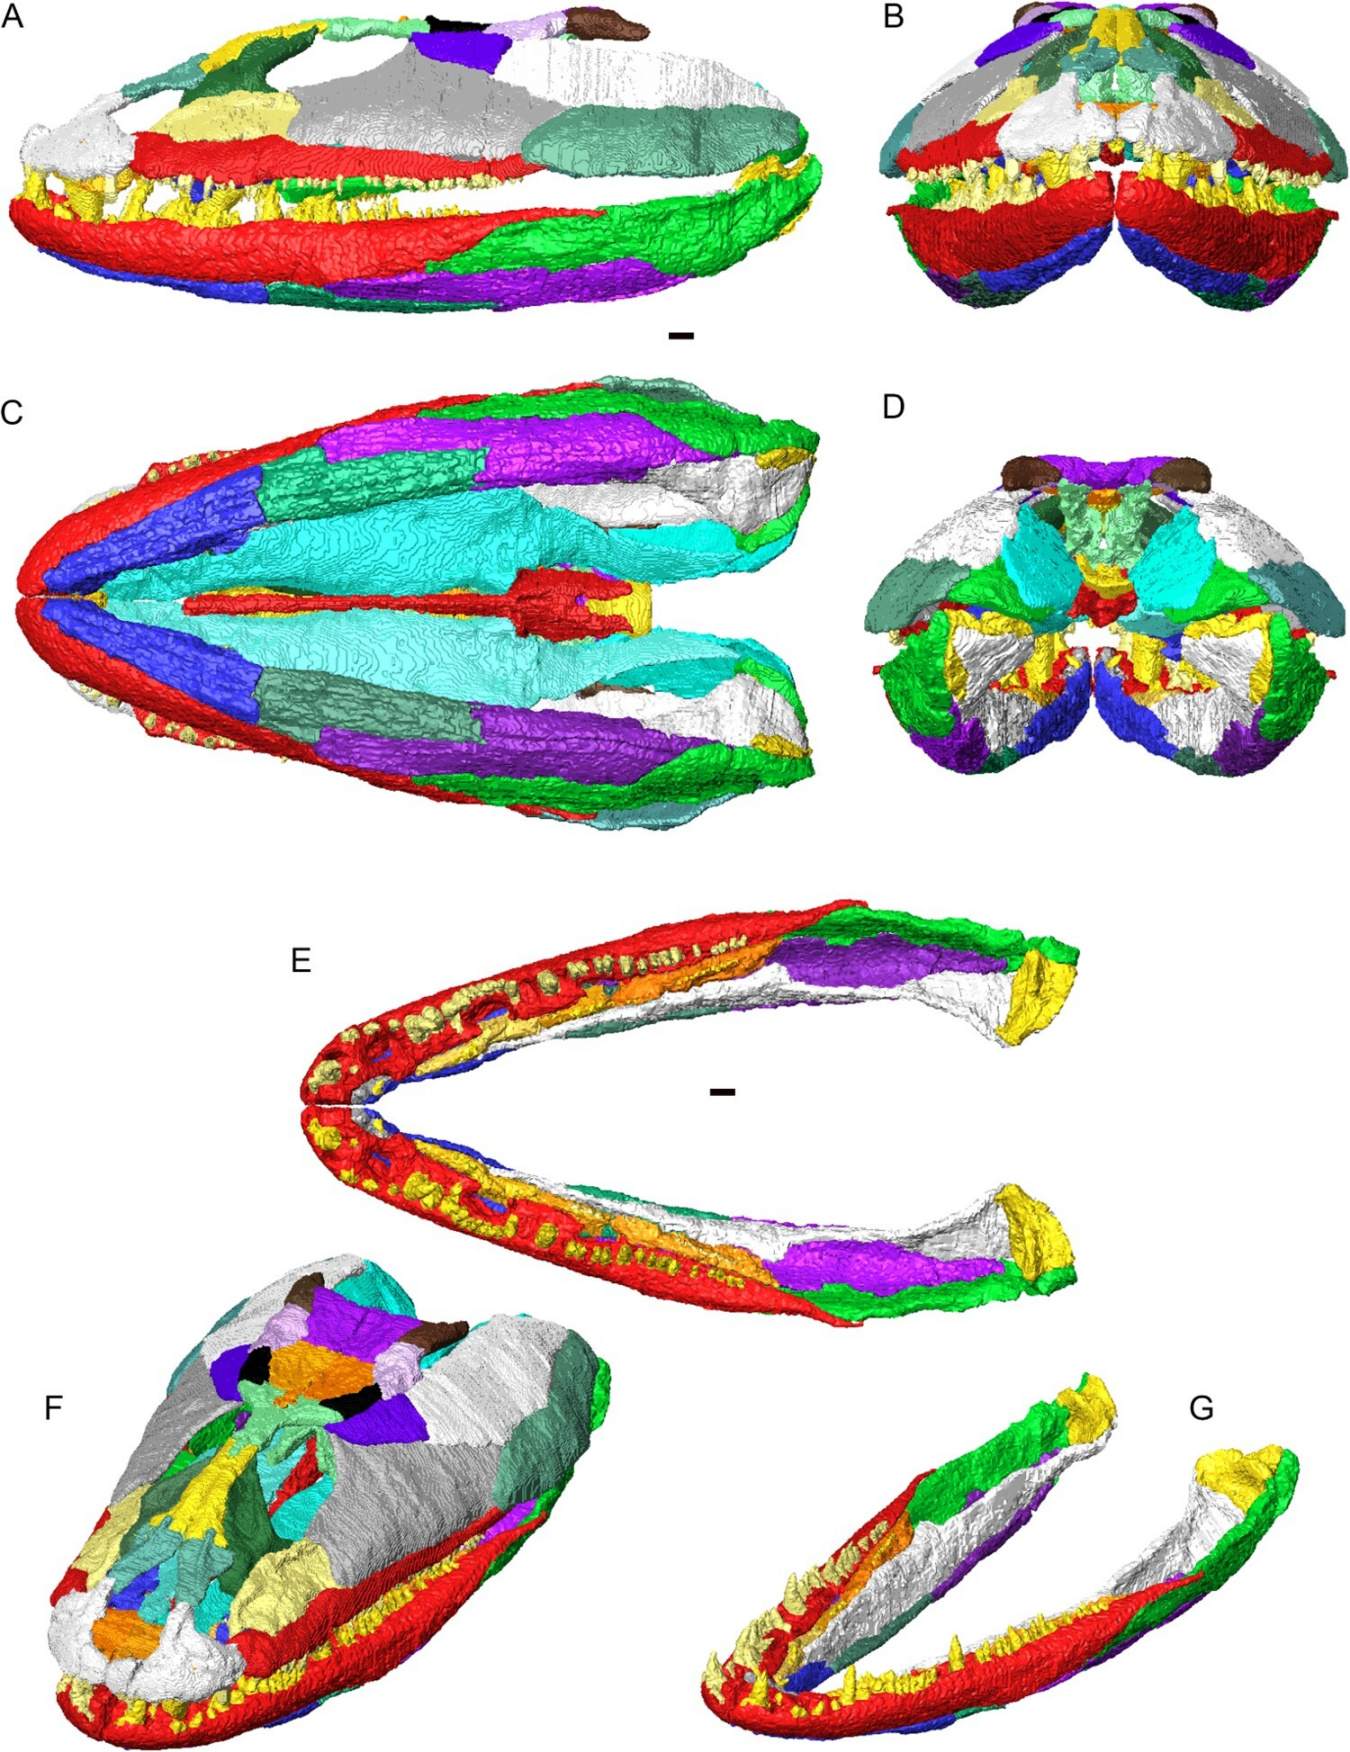 Crassigyrinus scoticus ၏ ကျောရိုးနှင့် အောက်မေးရိုးများကို 3D ပြန်လည်တည်ဆောက်ခြင်း ကွဲပြားသောအရောင်များဖြင့် ပြသထားသော အရိုးတစ်ခုစီ။ A၊ ဘယ်ဘက်ခြမ်း မြင်ကွင်း၊ B, ရှေ့မြင်ကွင်း; C, ventral အမြင်; ဃ၊ အနောက်မြင်၊ E၊ ပါးရိုးအောက်ပိုင်း ပြတ်သားသော ကျောရိုးမြင်ကွင်းတွင်၊ F၊ cranium နှင့် အောက်မေးရိုးများကို dorsolateral oblique မြင်ကွင်းတွင်၊ G၊ ပါးရိုးအောက်ပိုင်းကို ကျောဘက်ခြမ်း မြင်ကွင်းတွင် သပ်သပ်ရပ်ရပ်ထားသည်။